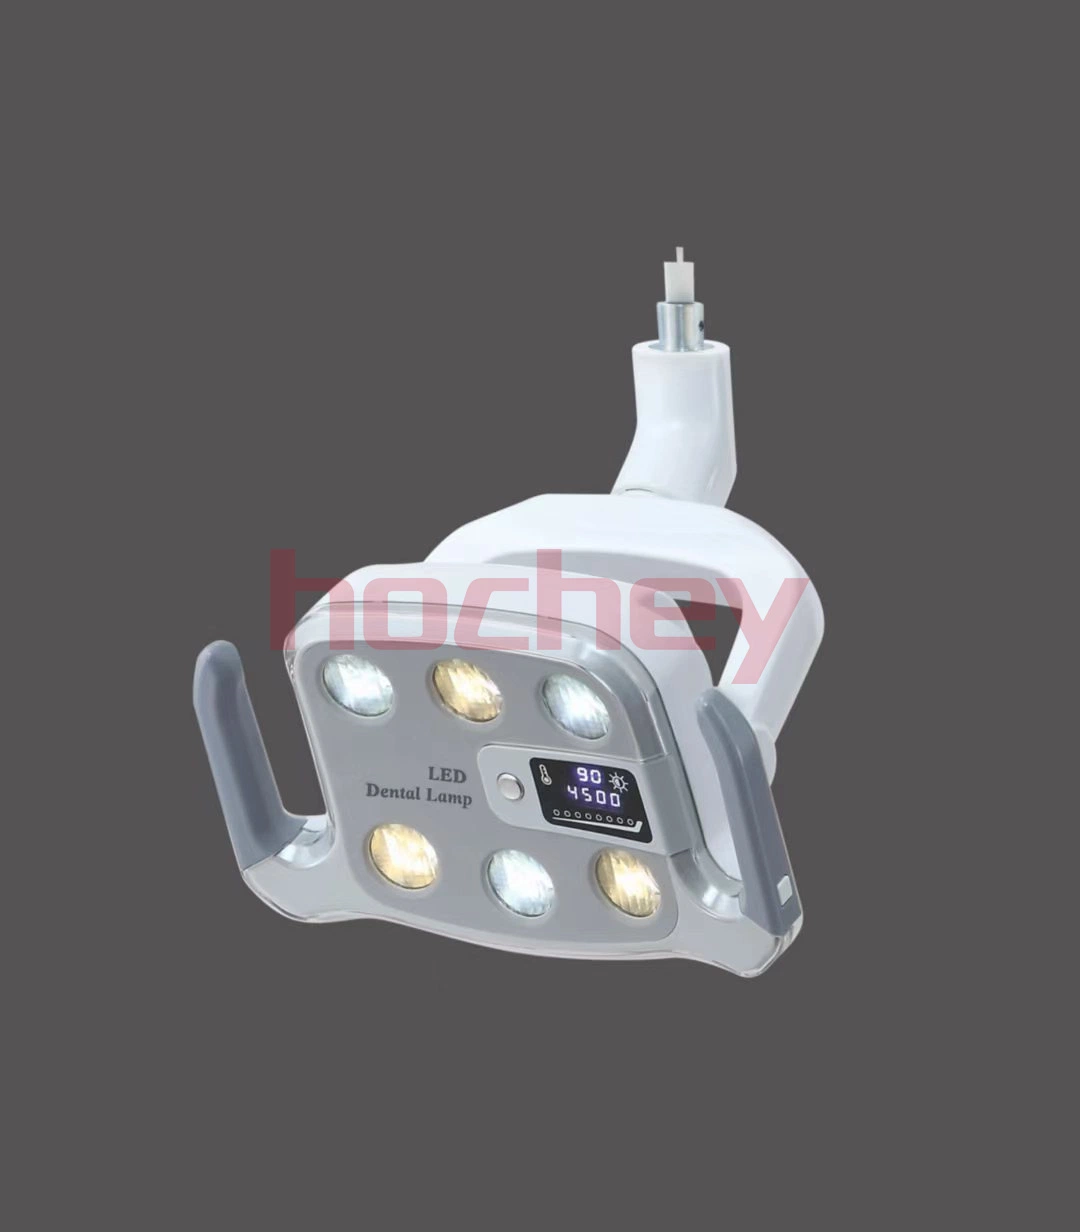 Hochey Medical Rectangular LED Magnifier Lamp Mobile Light for Beauty, Salon, Clinic